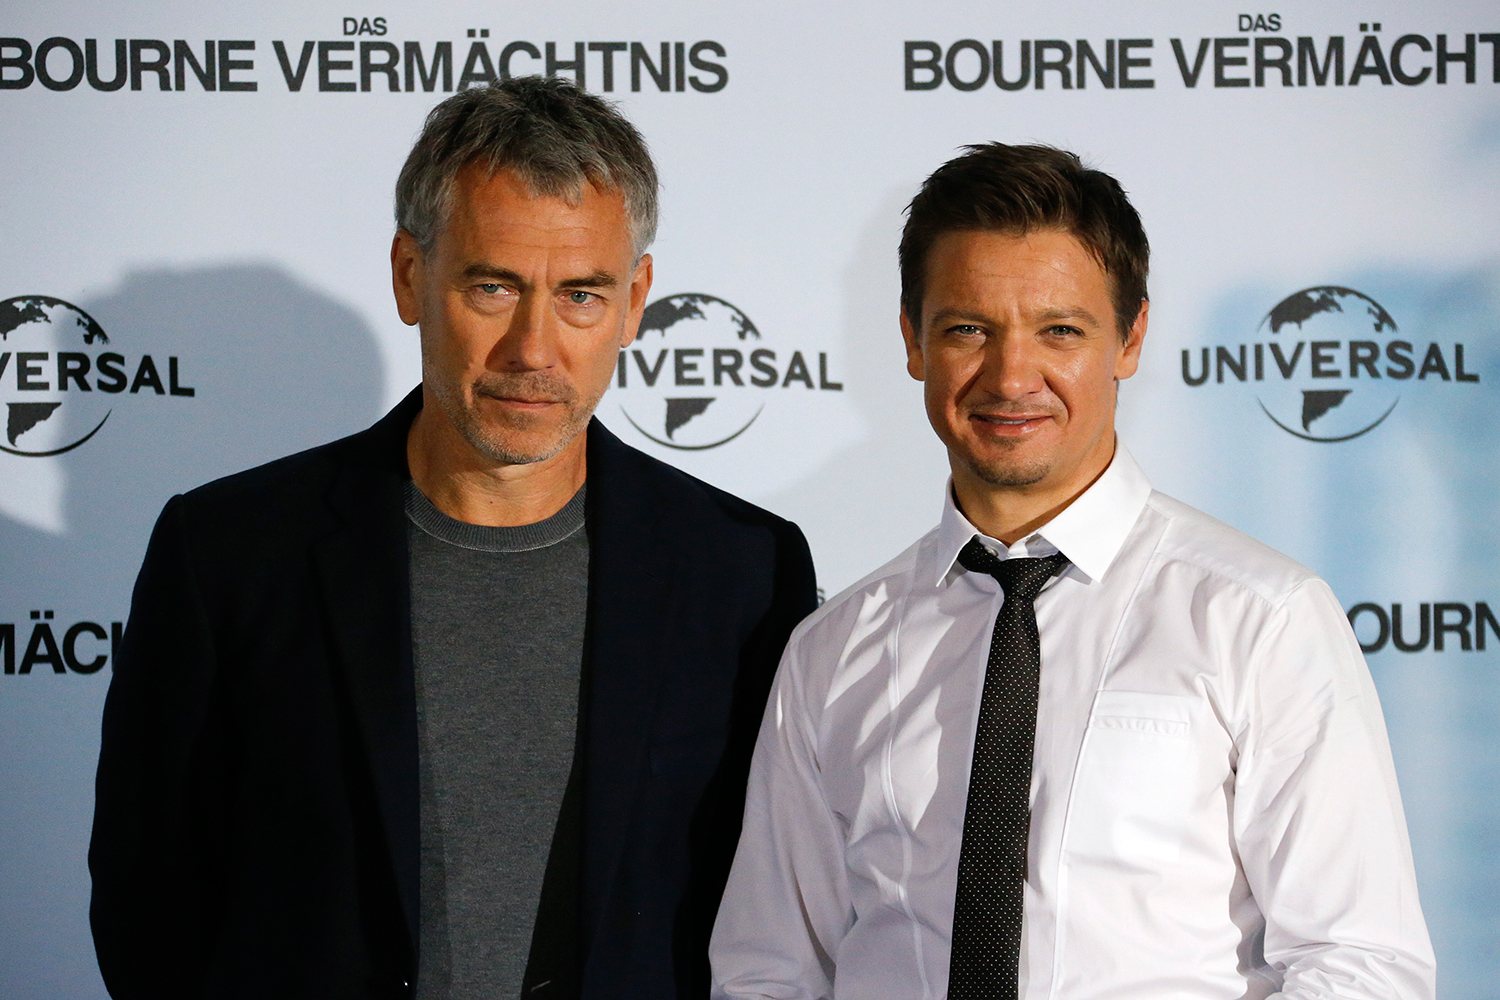 La quinta entrega de la saga "Bourne" se rodará en Santa Cruz de Tenerife